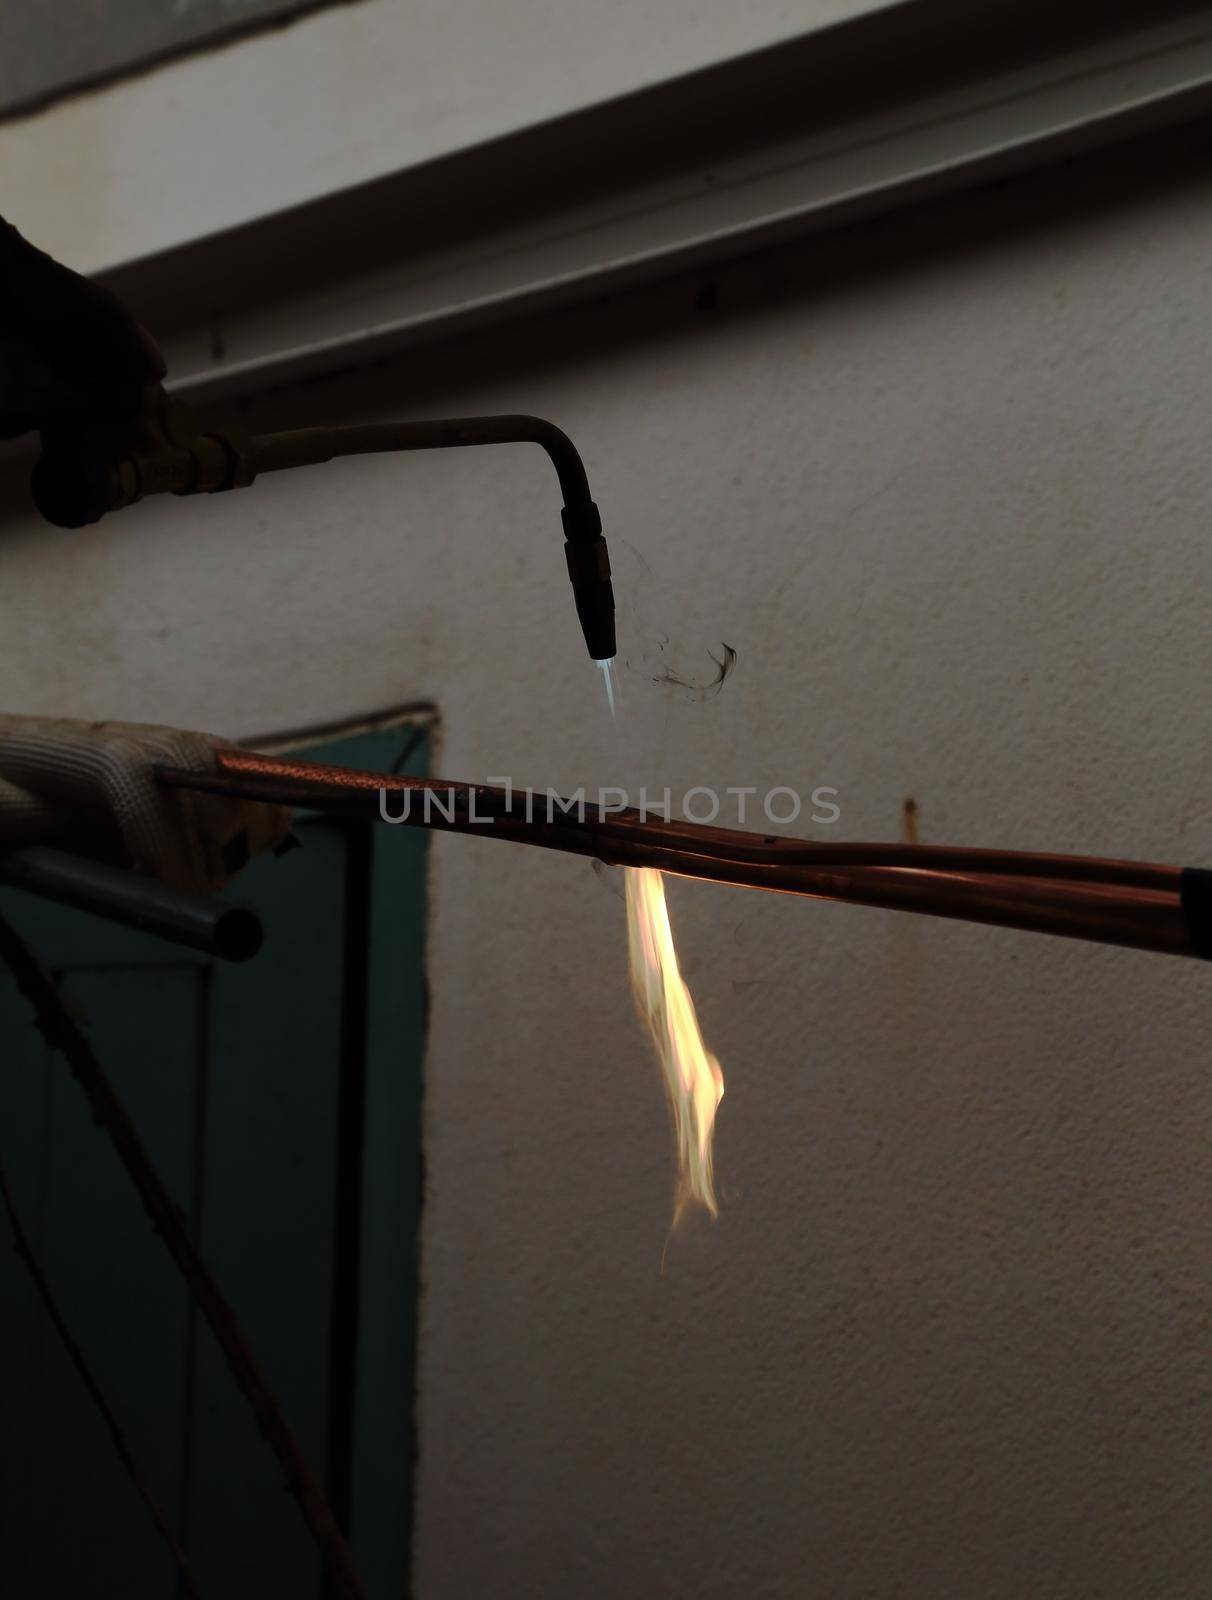 Air conditioner repairman welding copper pipes